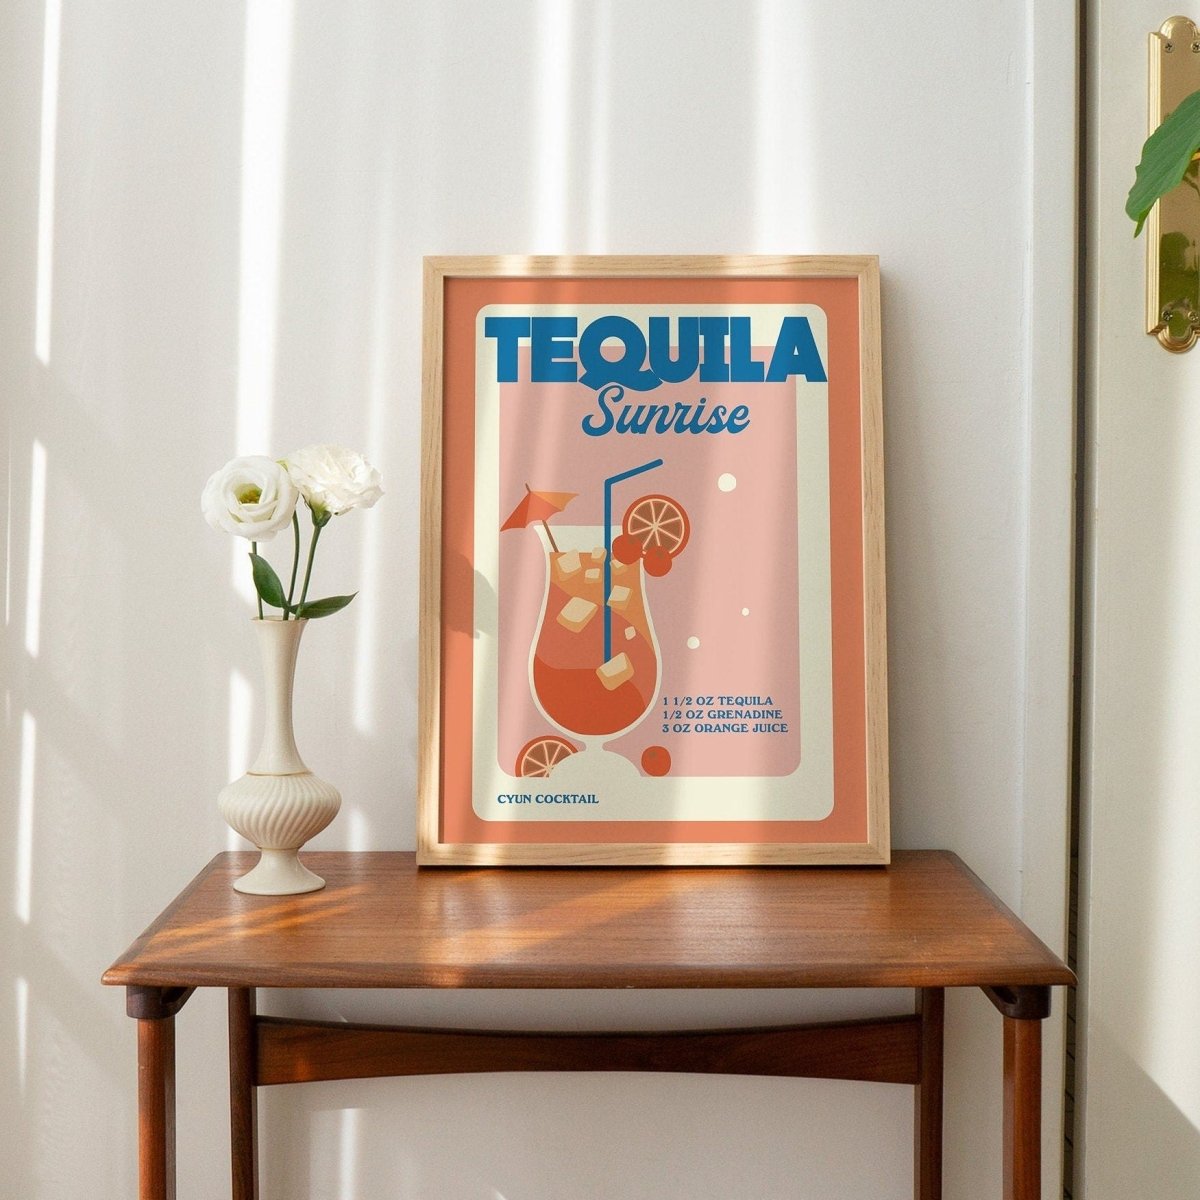 'Tequila Sunrise' Cocktail Recipe Print - Art Prints - Kinder Planet Company